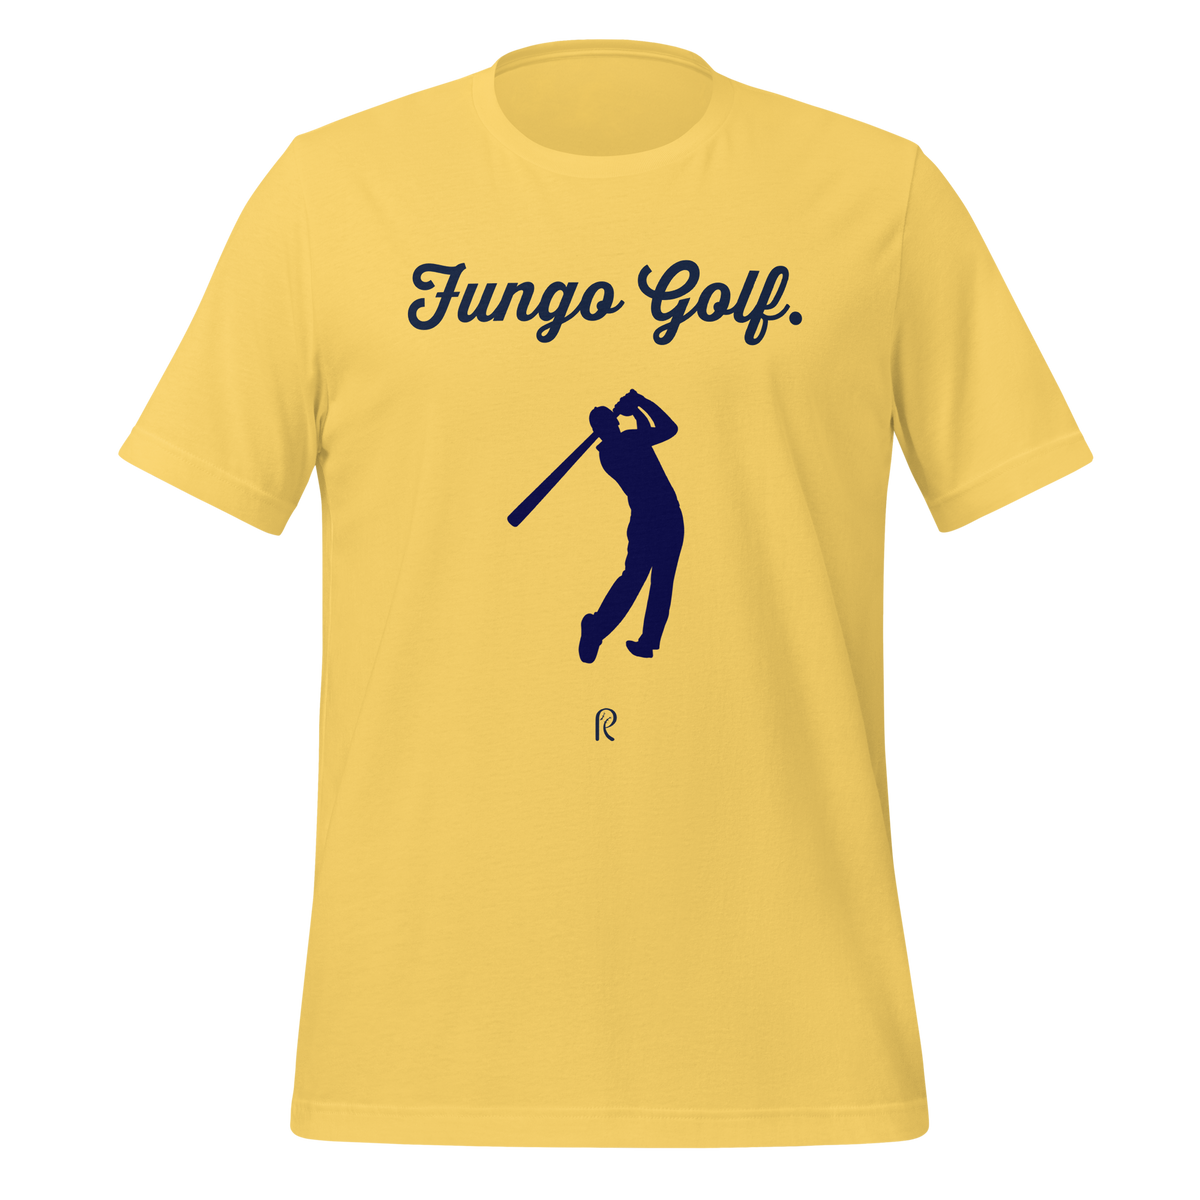 Fungo Golf (Yellow)